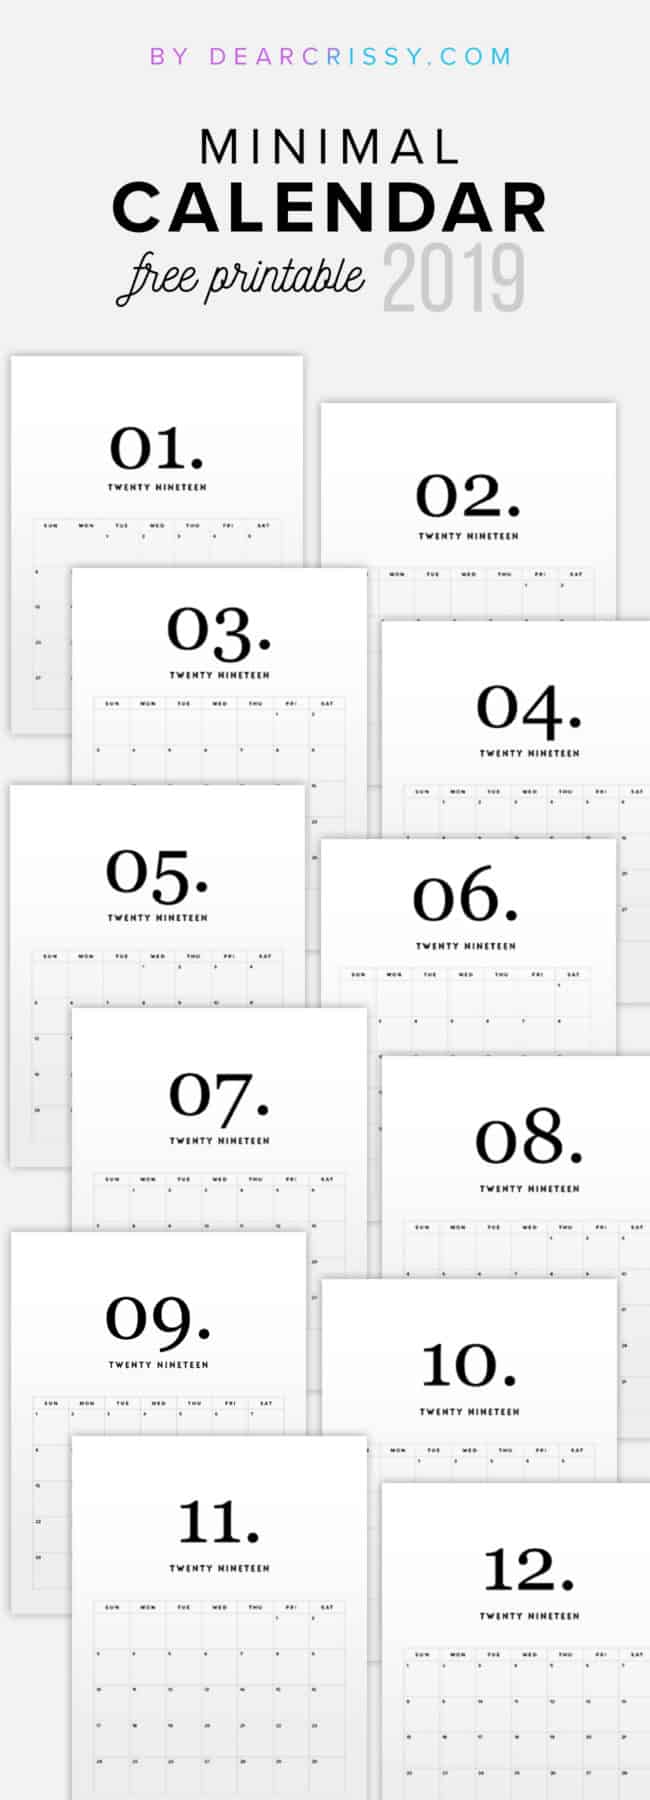 Free Printable 2019 Minimal Calendar - Modern Calendar - Minimalist Calendar - Clean White Calendar 2019 - #2019Calendar #Printable #Calendar #minimalist #modern #simple